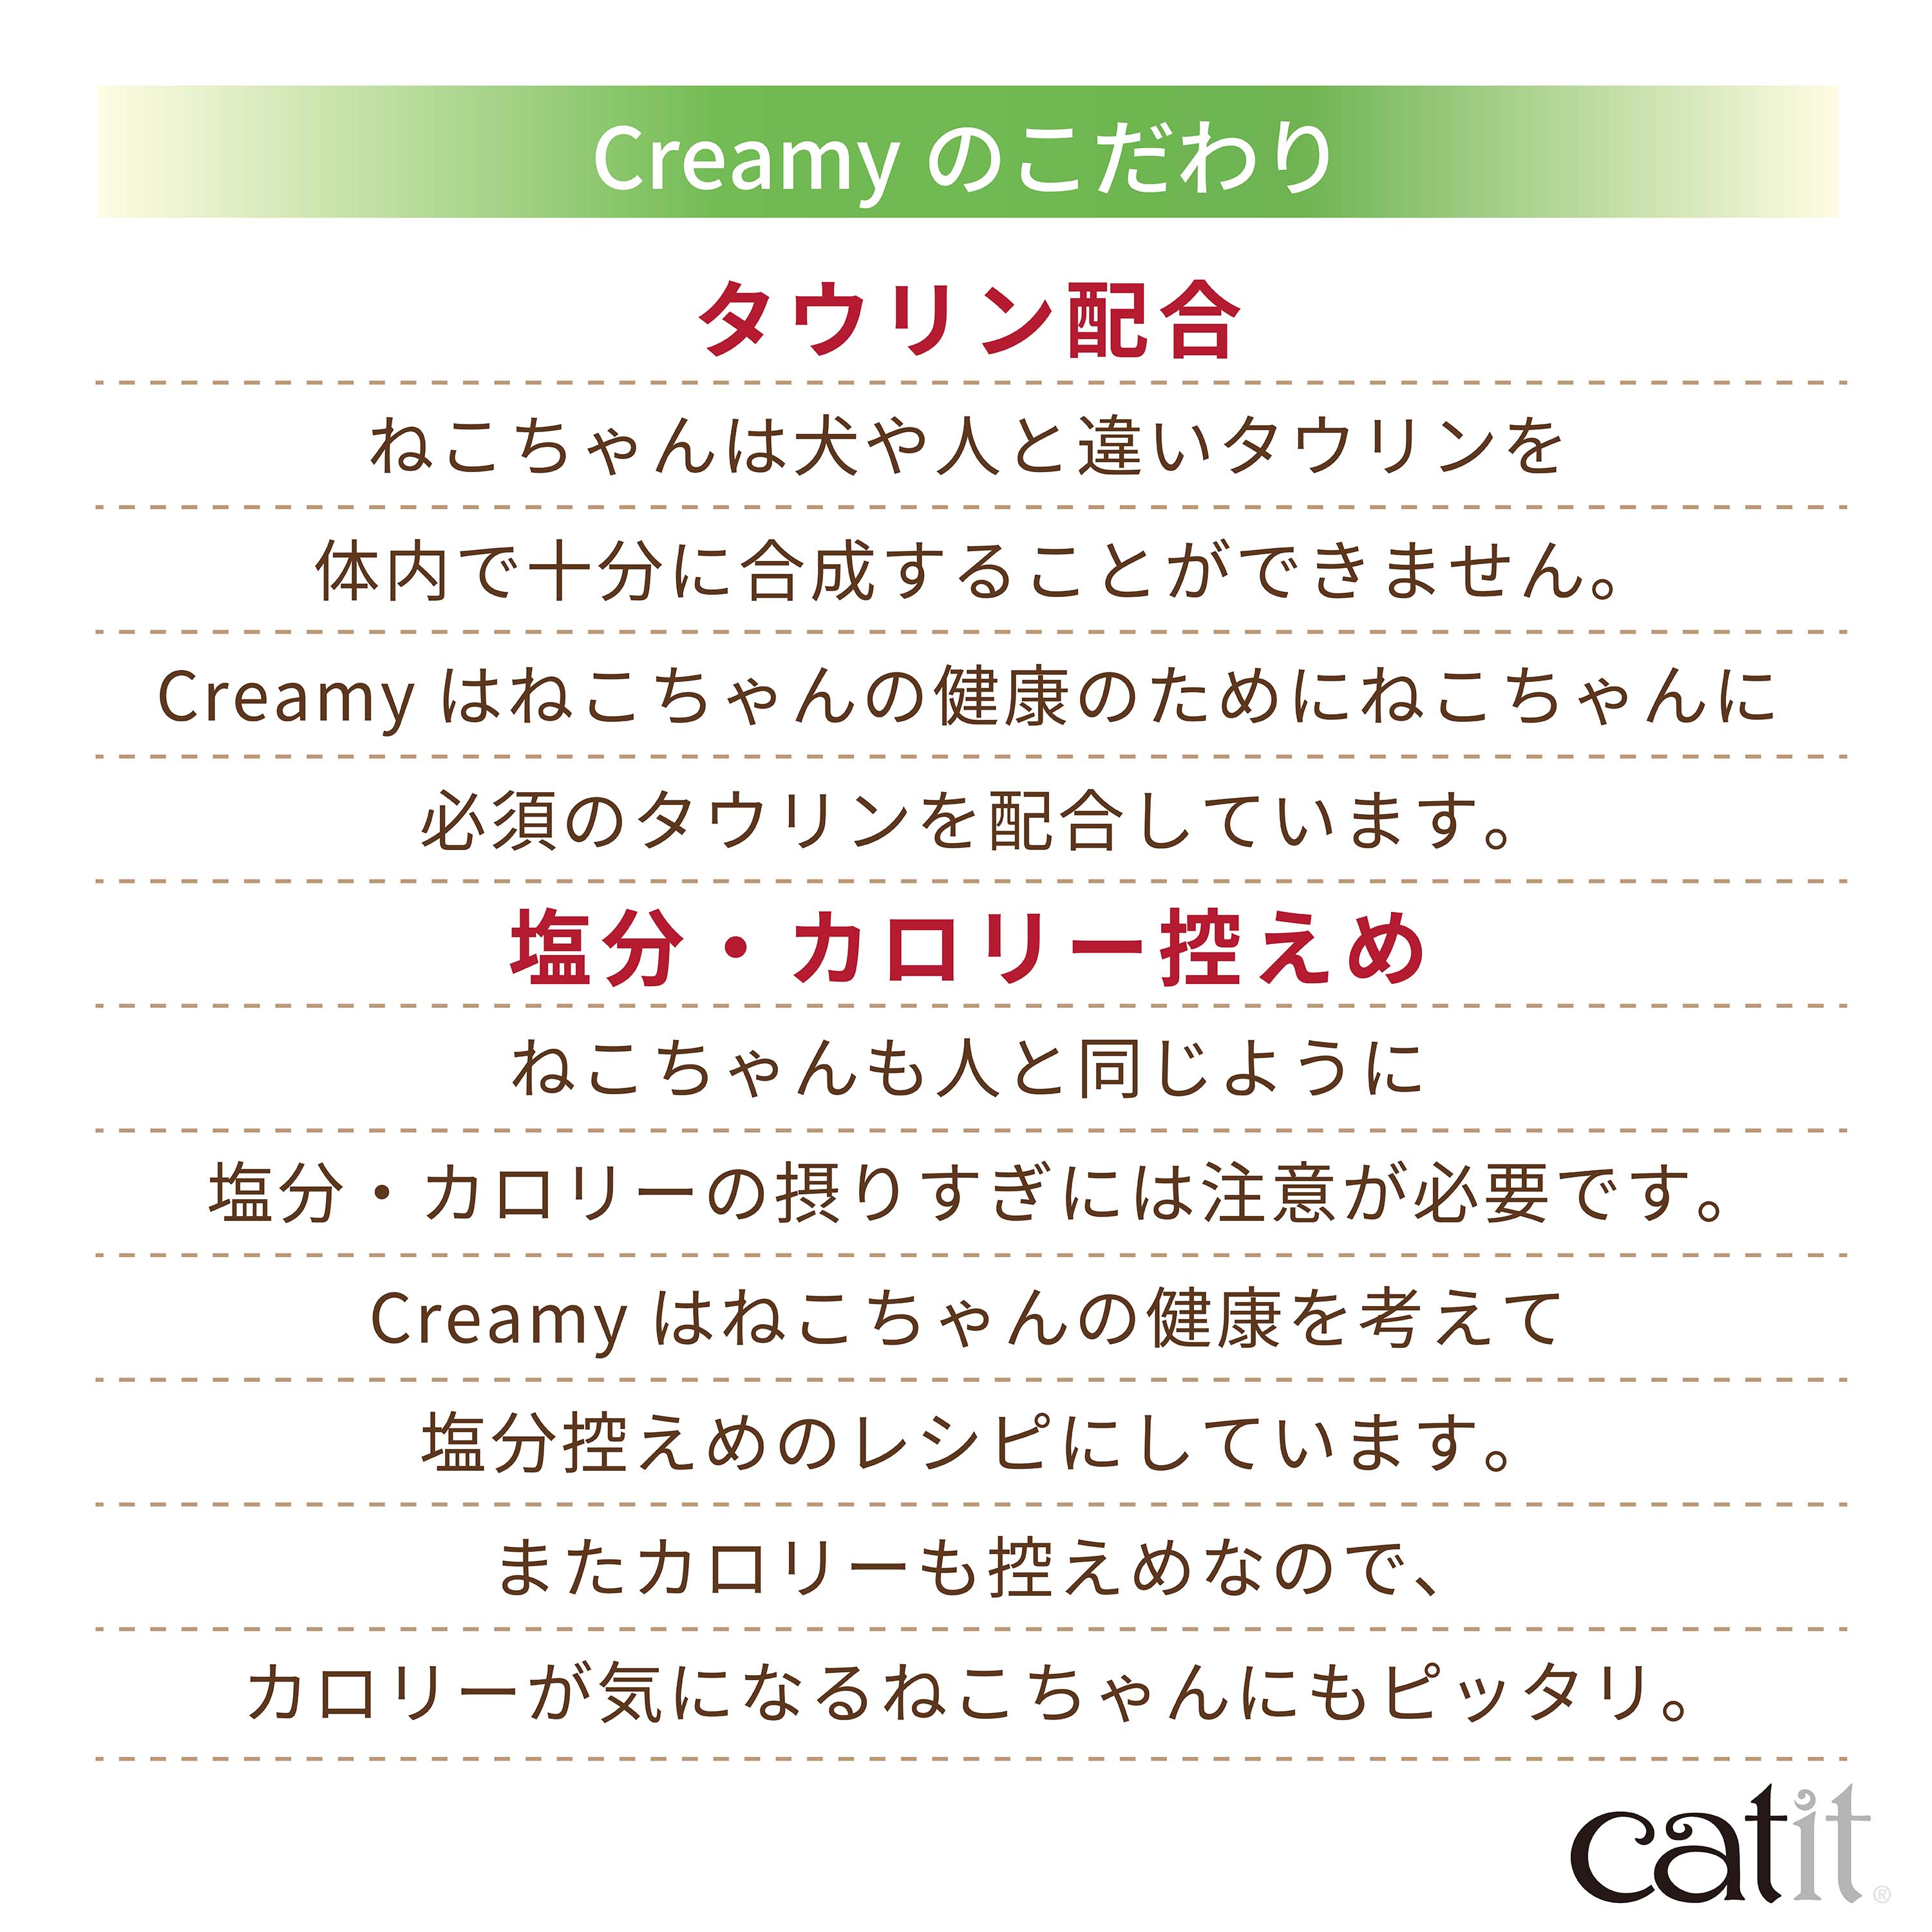 Catit Creamy サーモン 5本入